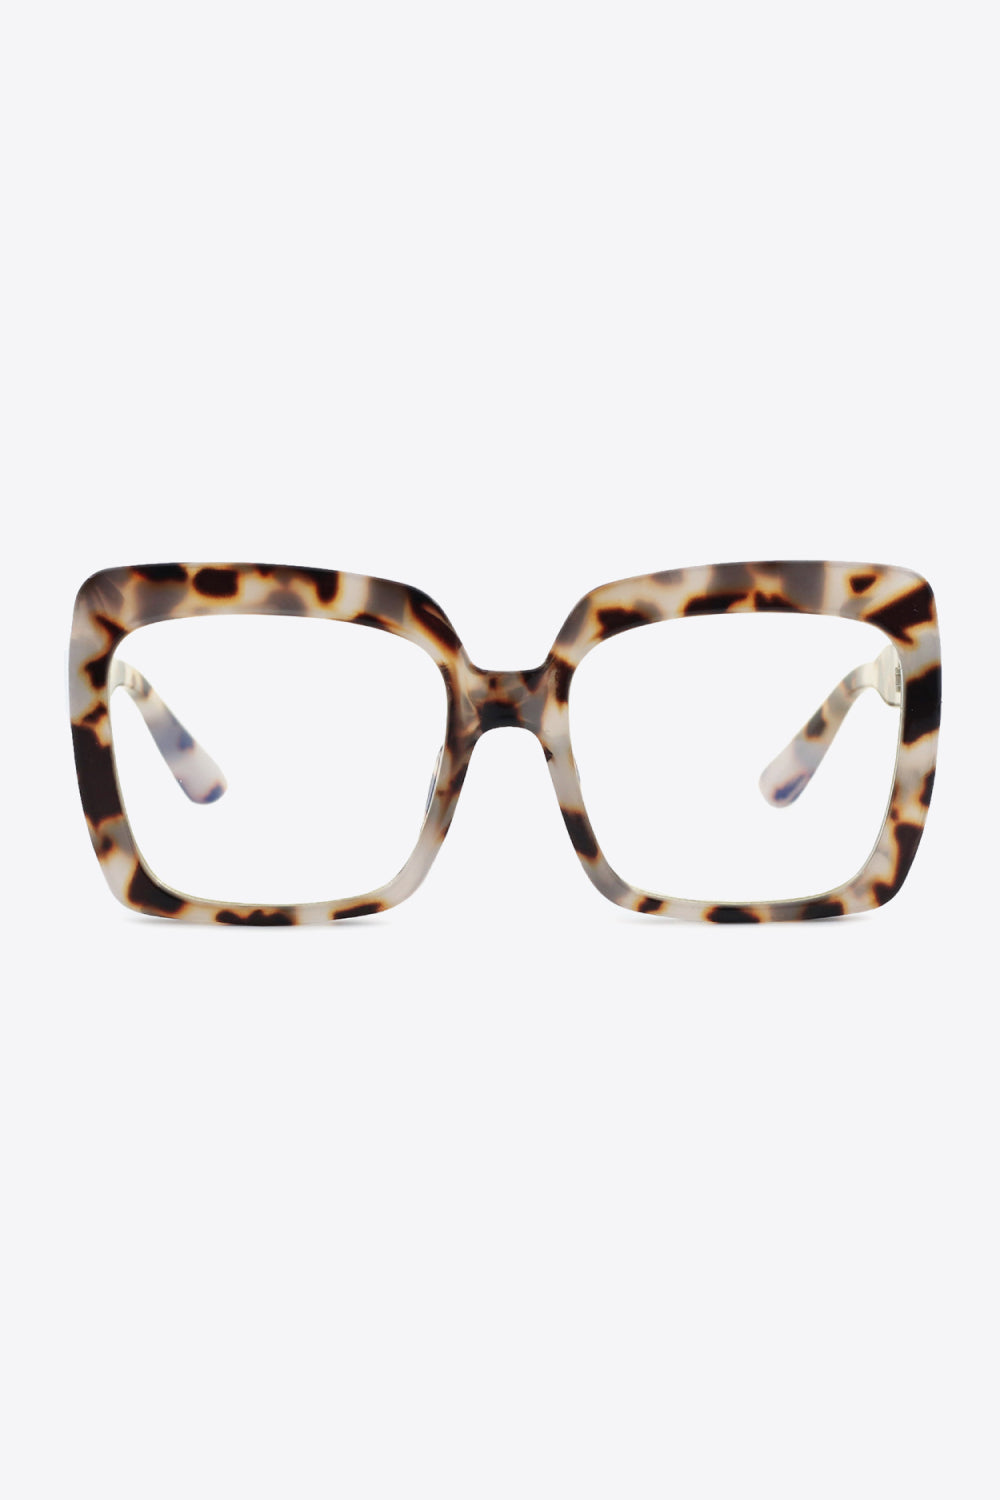 Tortoiseshell Full Rim Square Sunglasses Light Gray One Size Sunglasses by Vim&Vigor | Vim&Vigor Boutique